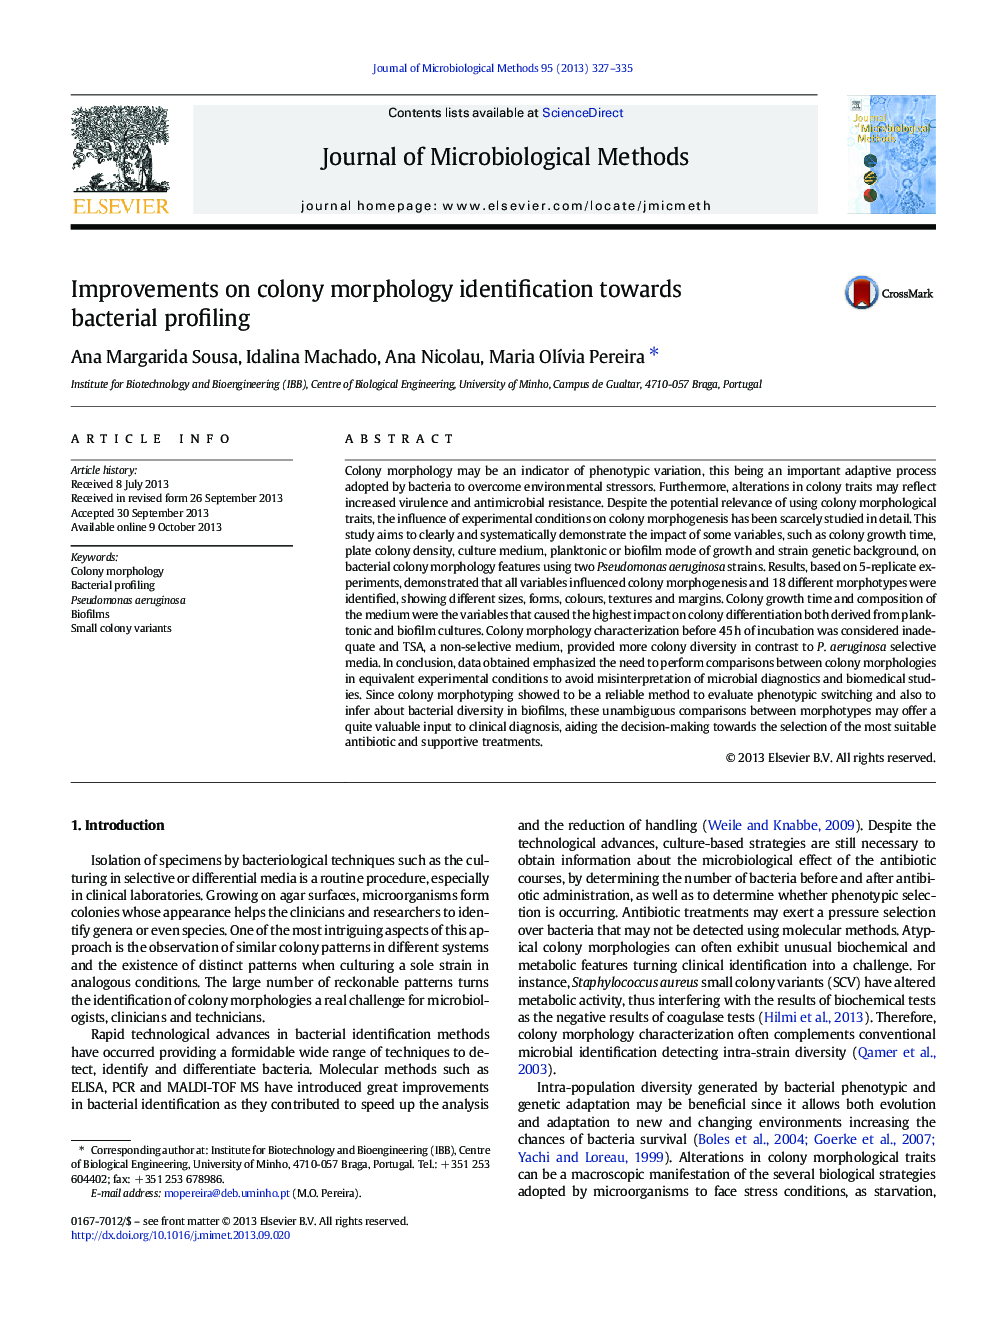 Improvements on colony morphology identification towards bacterial profiling